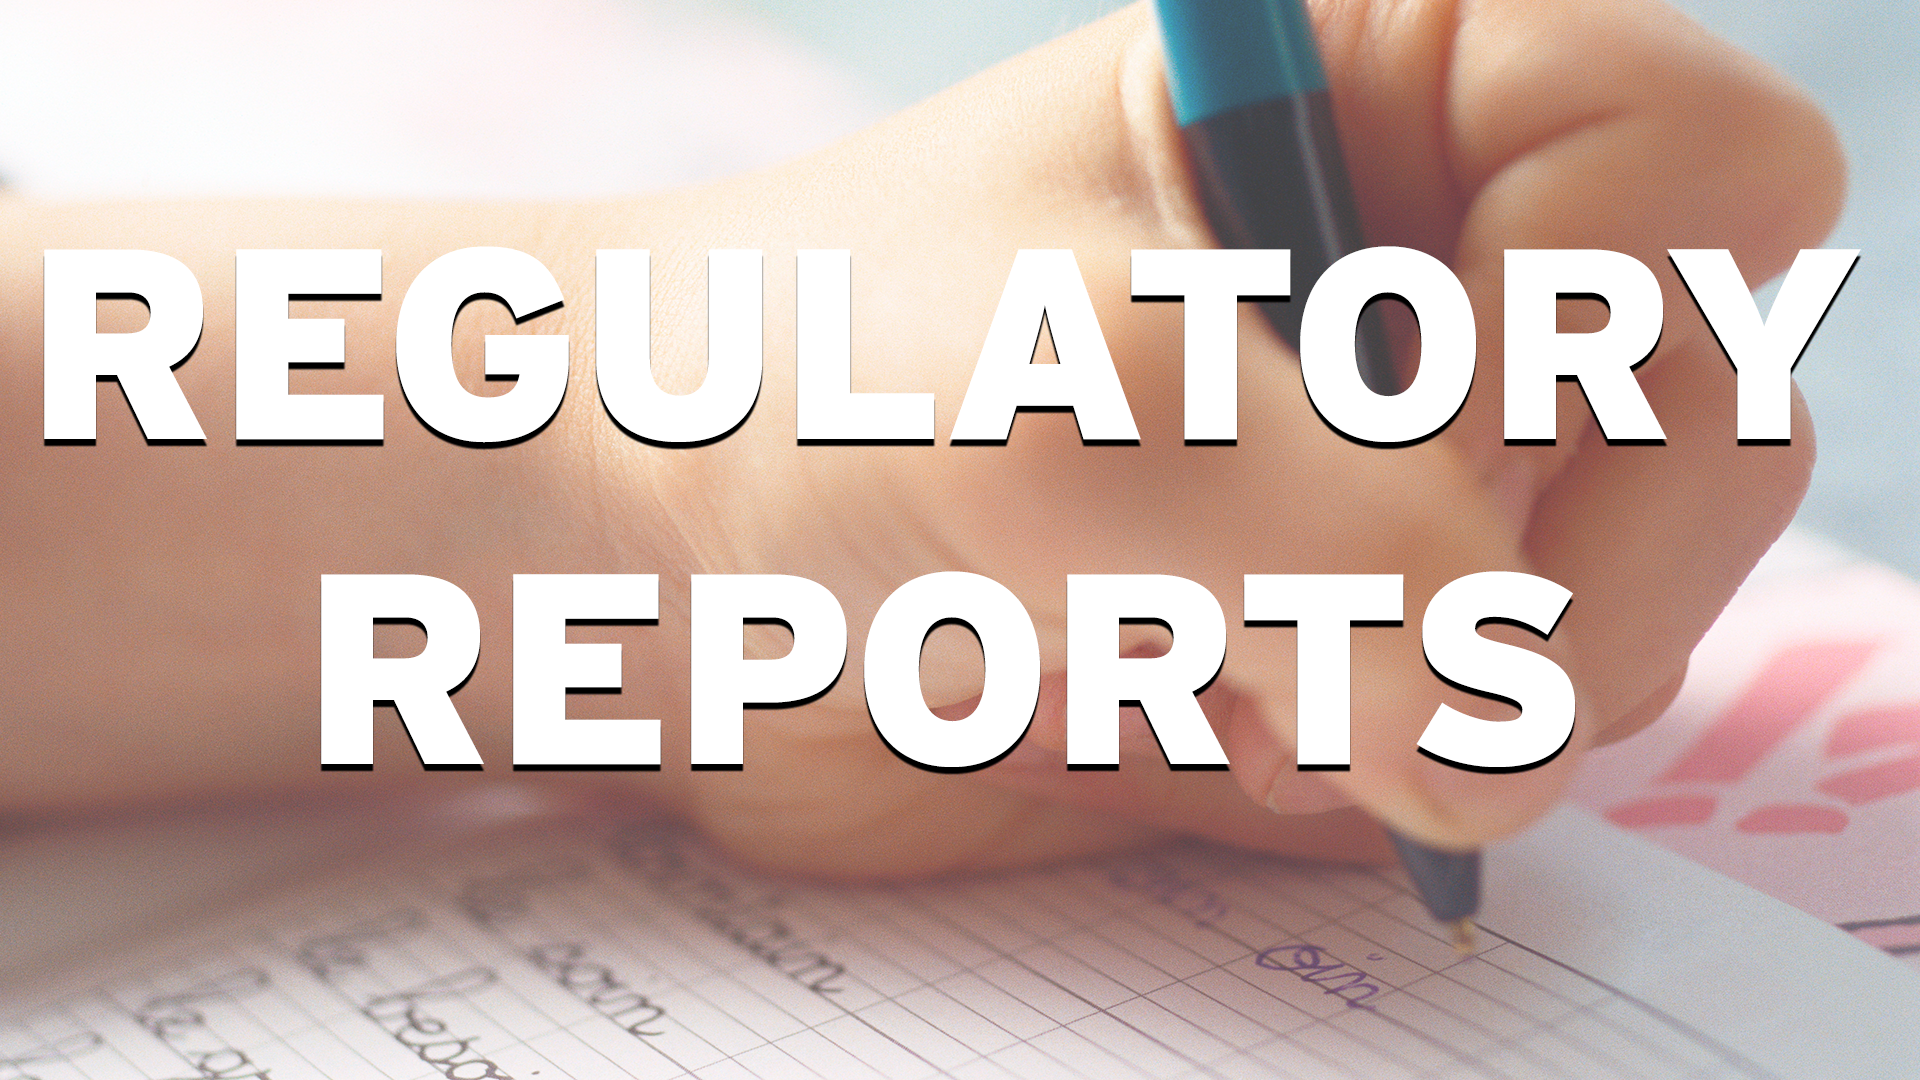 Regulatory reports image